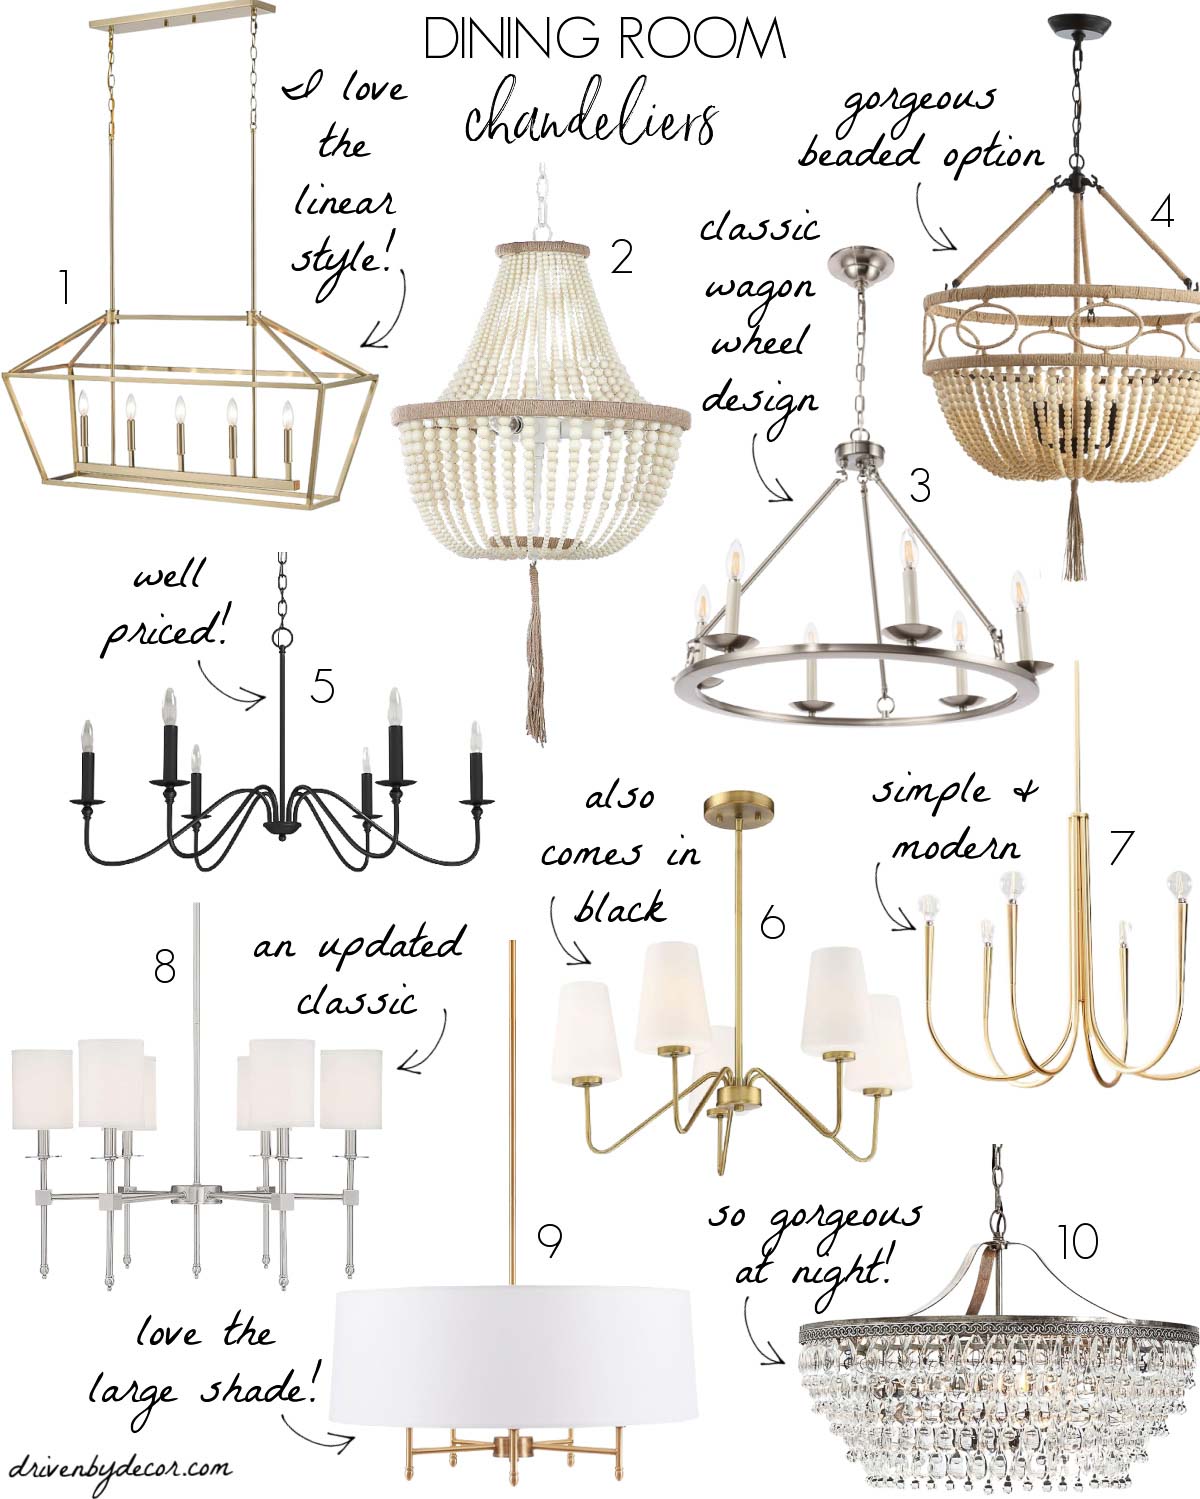 Dining room chandeliers - my favorites!